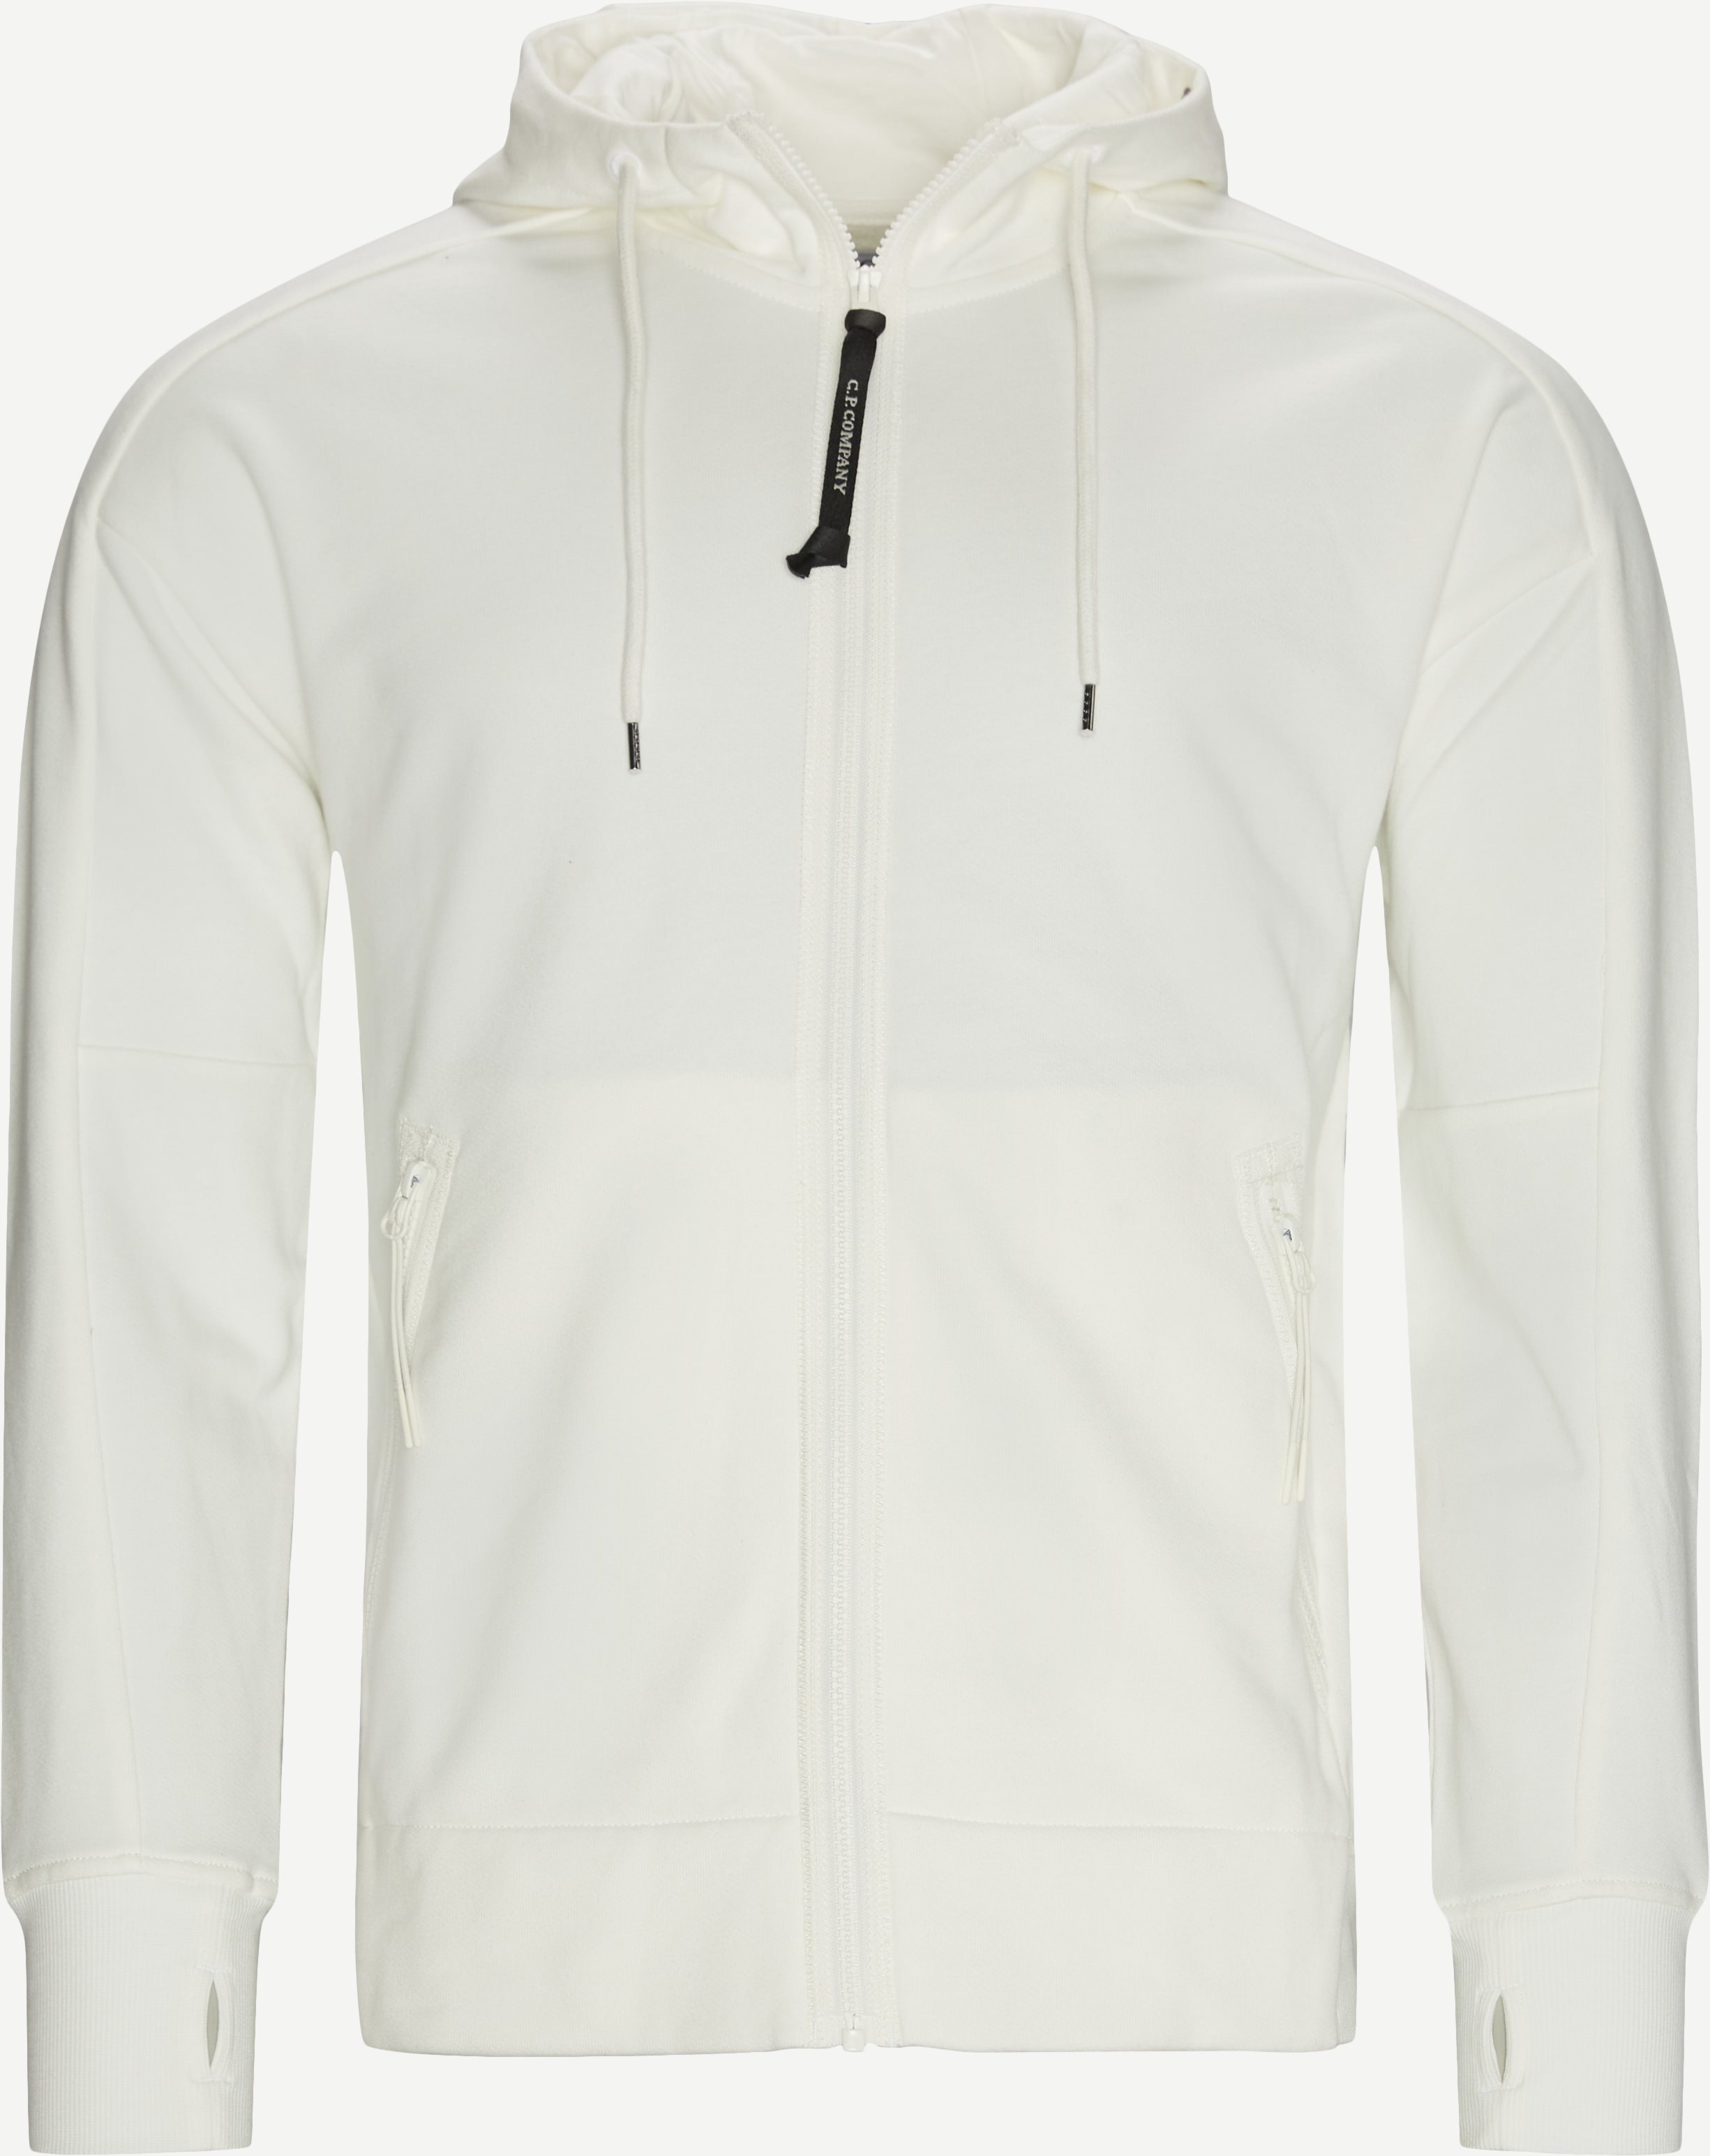 Diogonal Raised Hooded Sweatshirt - Sweatshirts - Regular fit - White